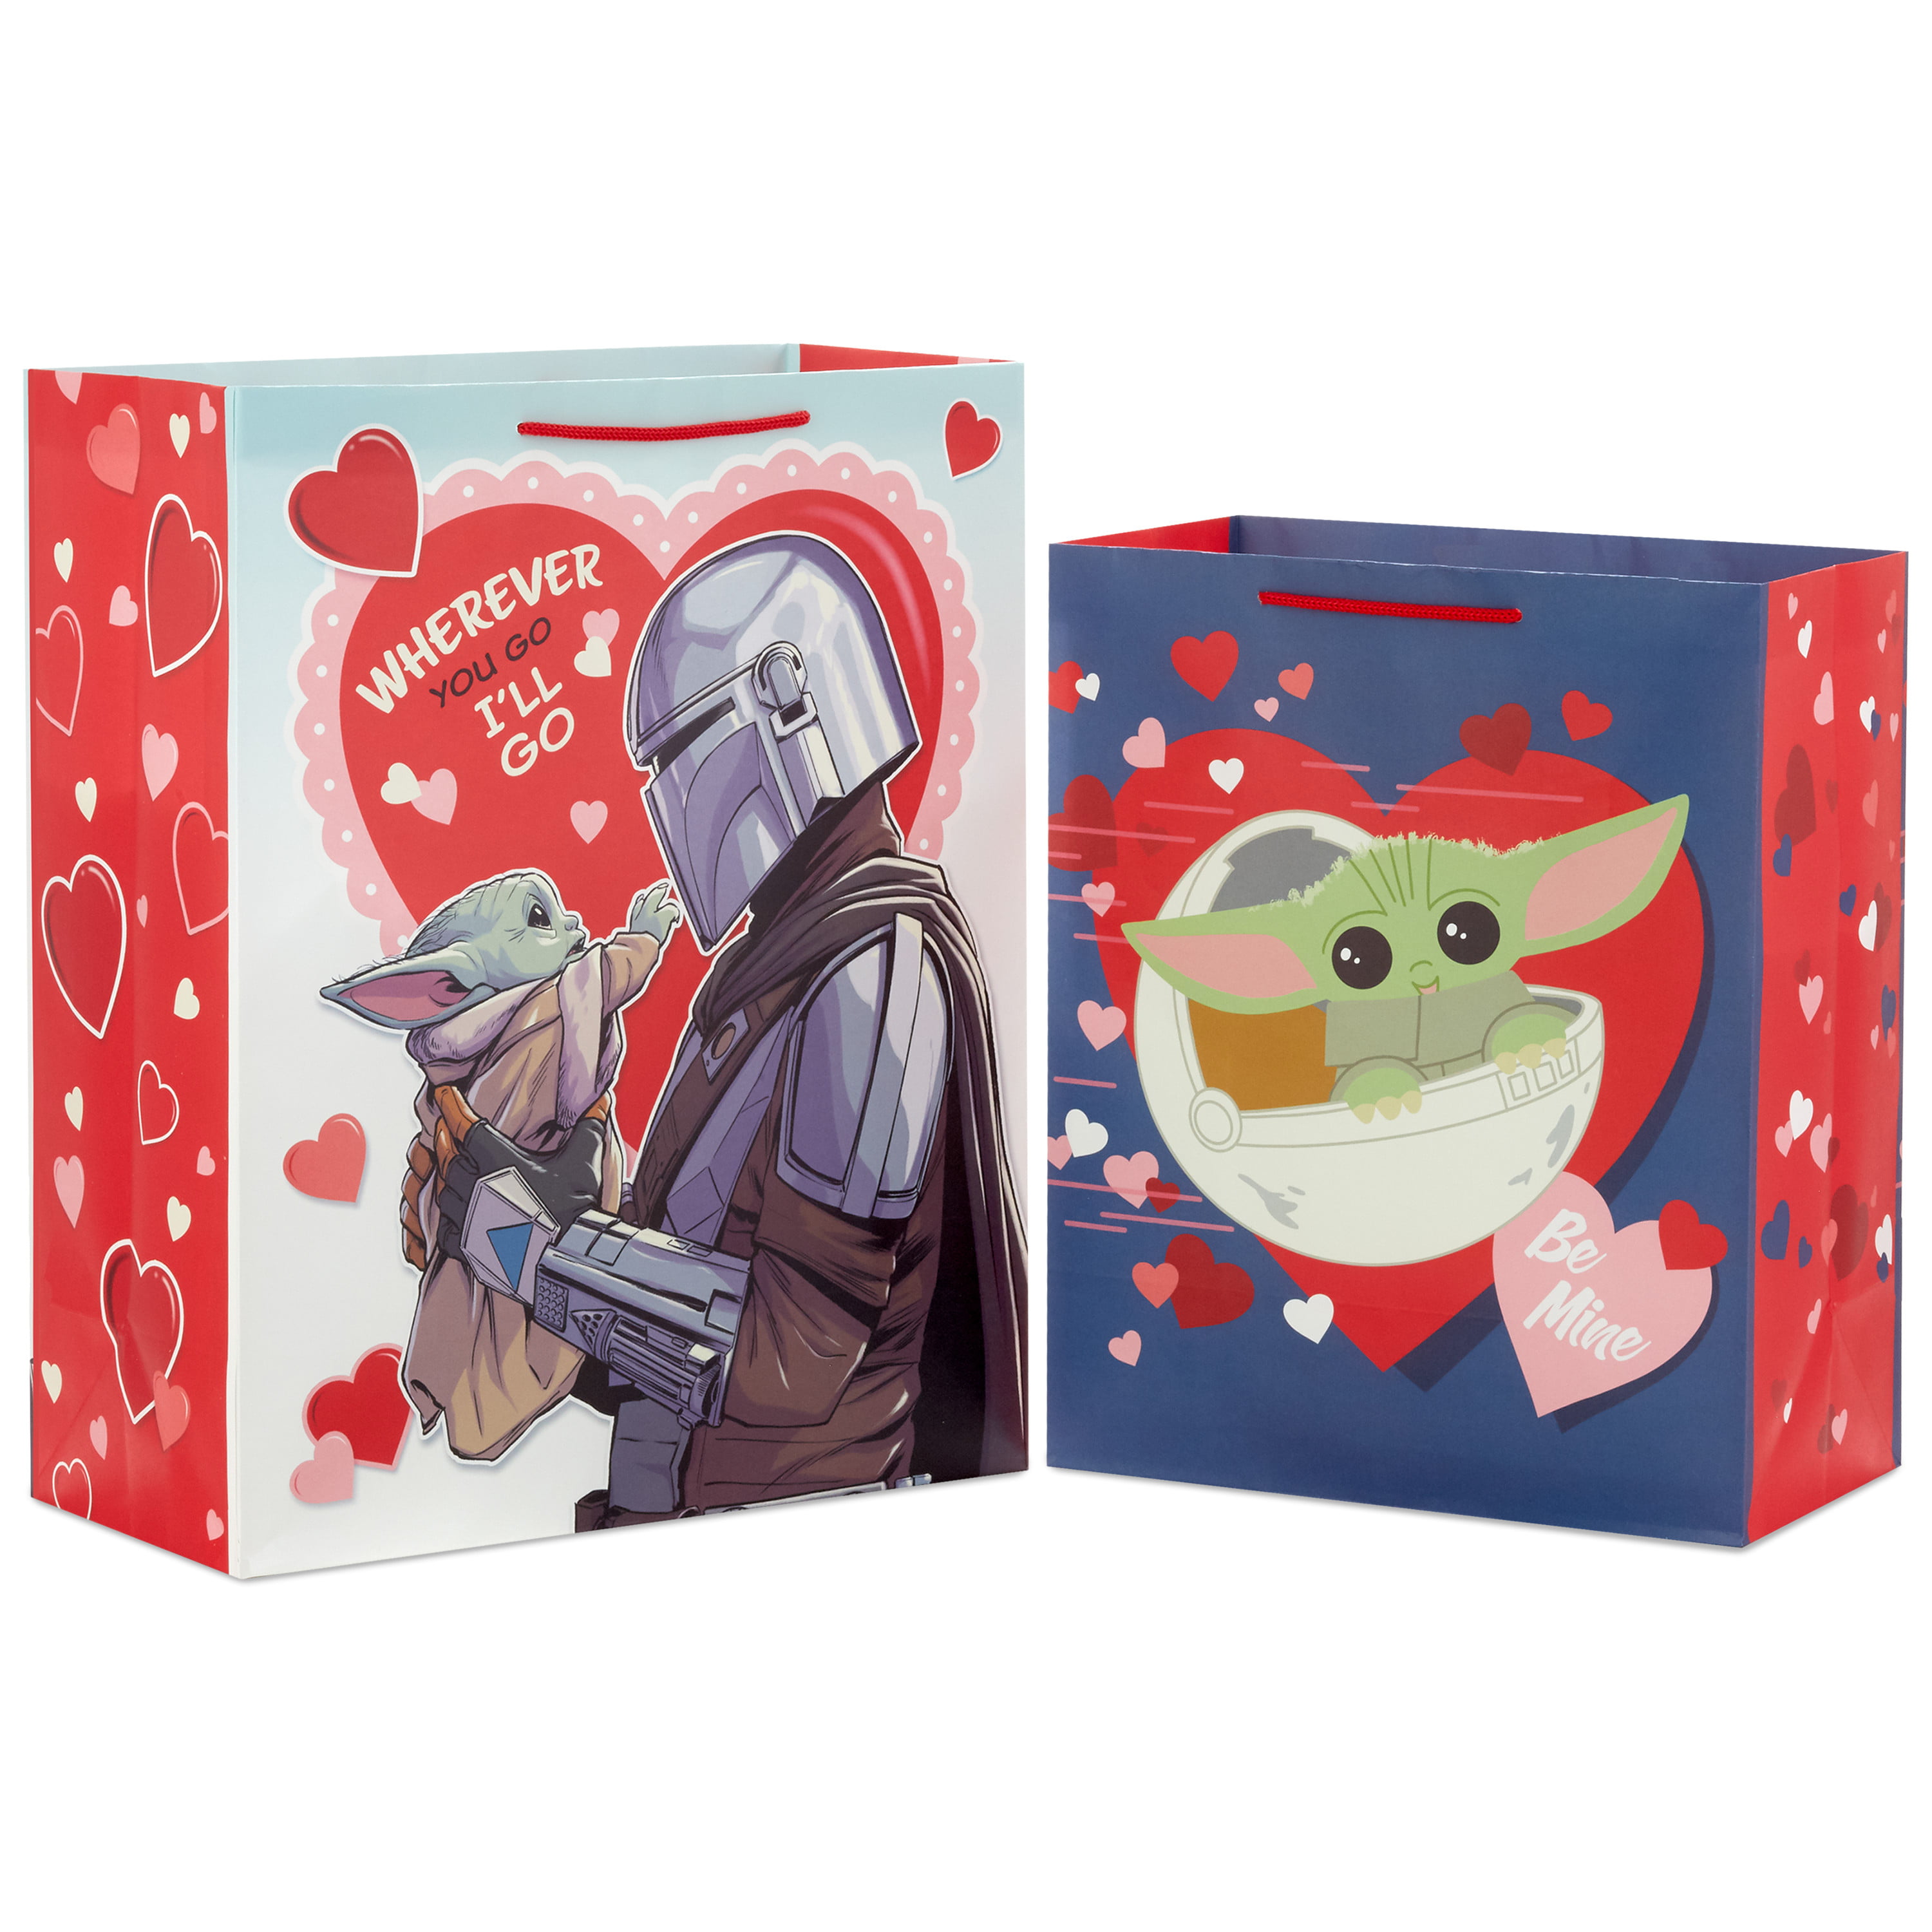 2-Count Hallmark Star Wars The Mandalorian Valentine's Day Gift Bag Set $3.27 + Free Shipping w/ Walmart+ or on $35+